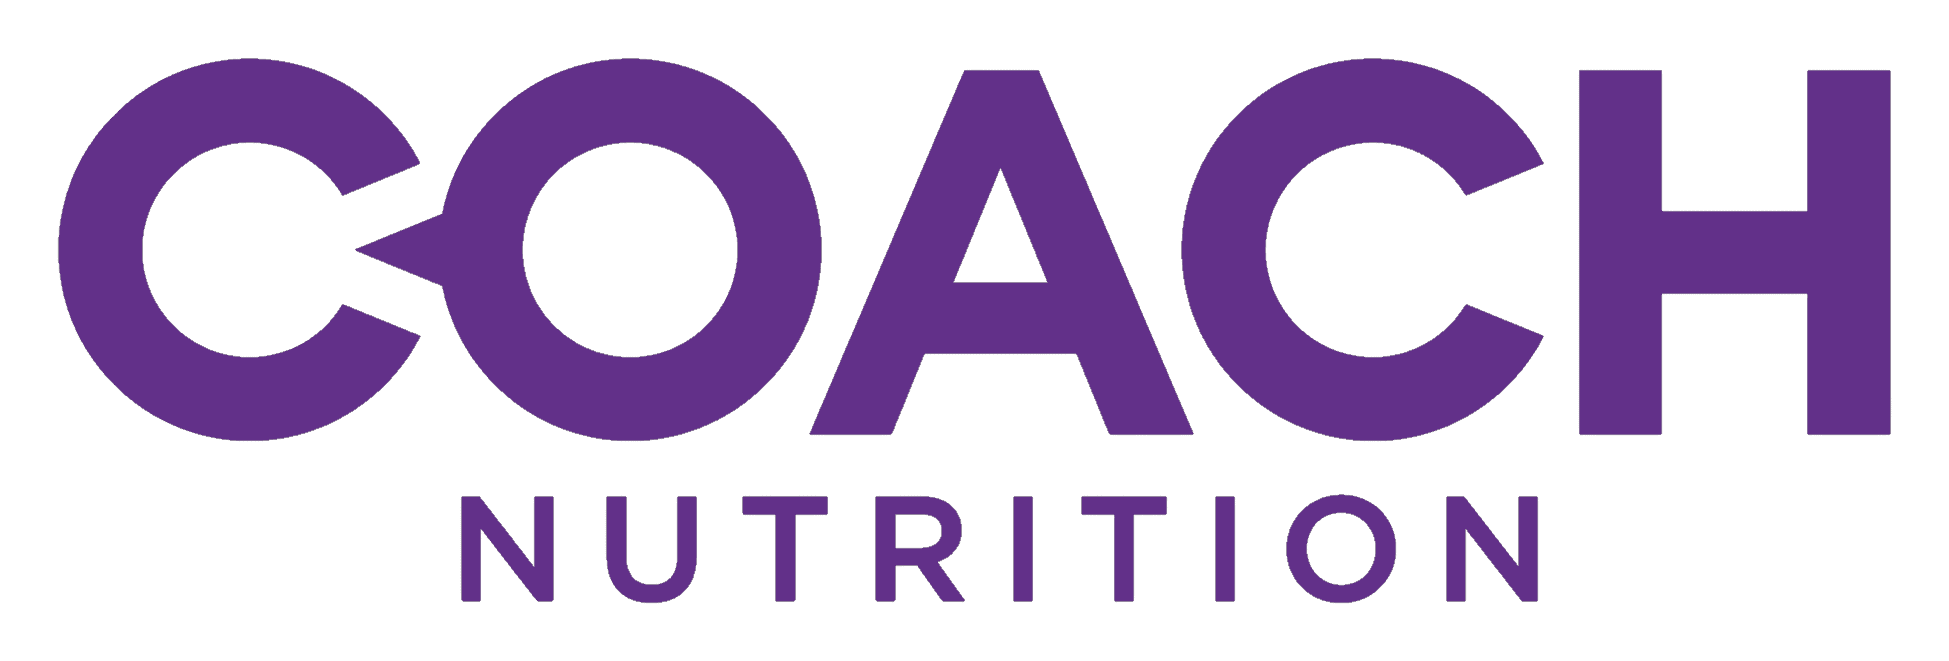 Coach Nutrition logo